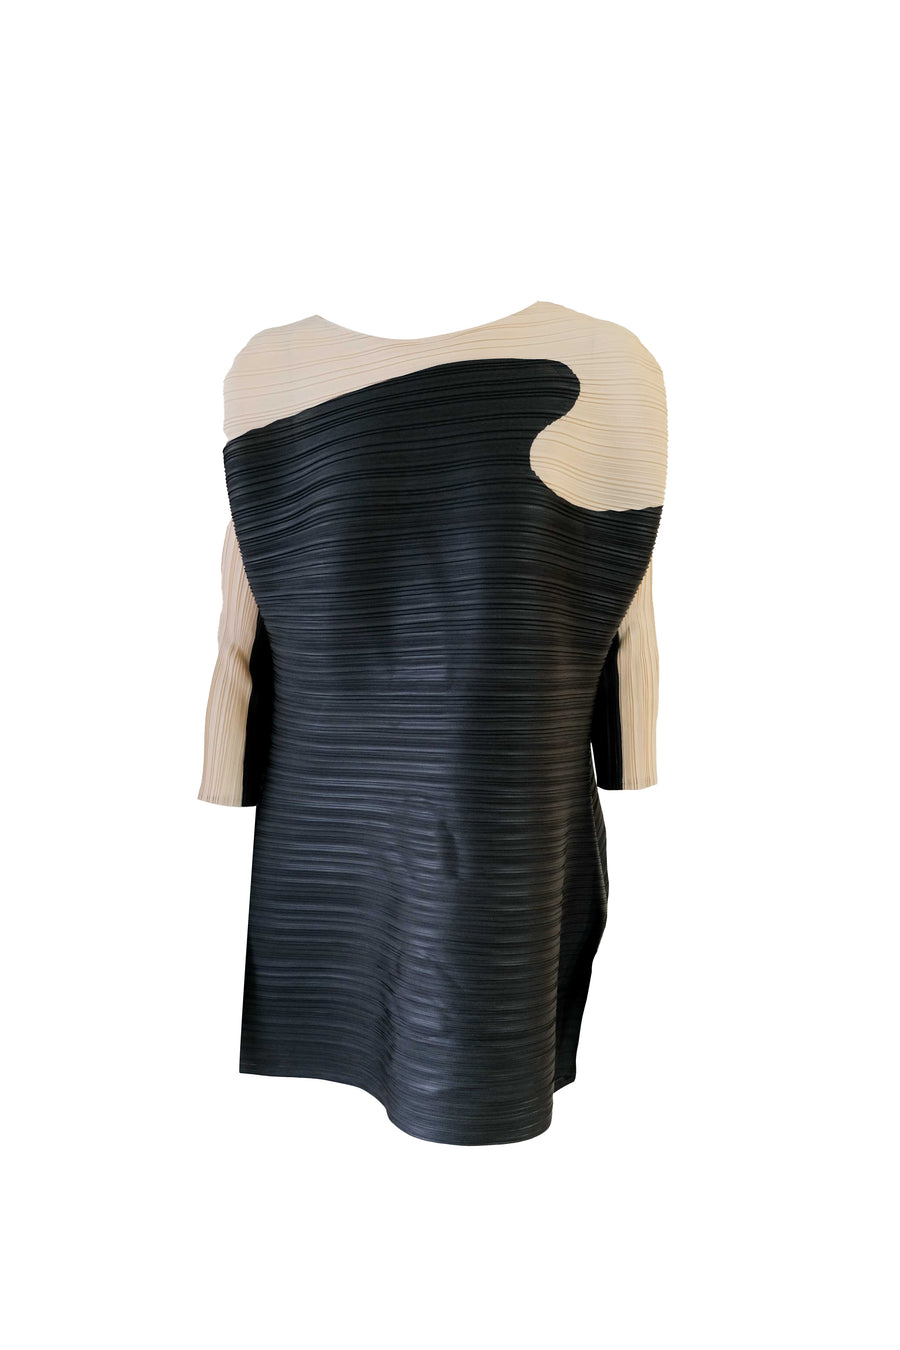 Pleated Dress 010 - Beige+Black